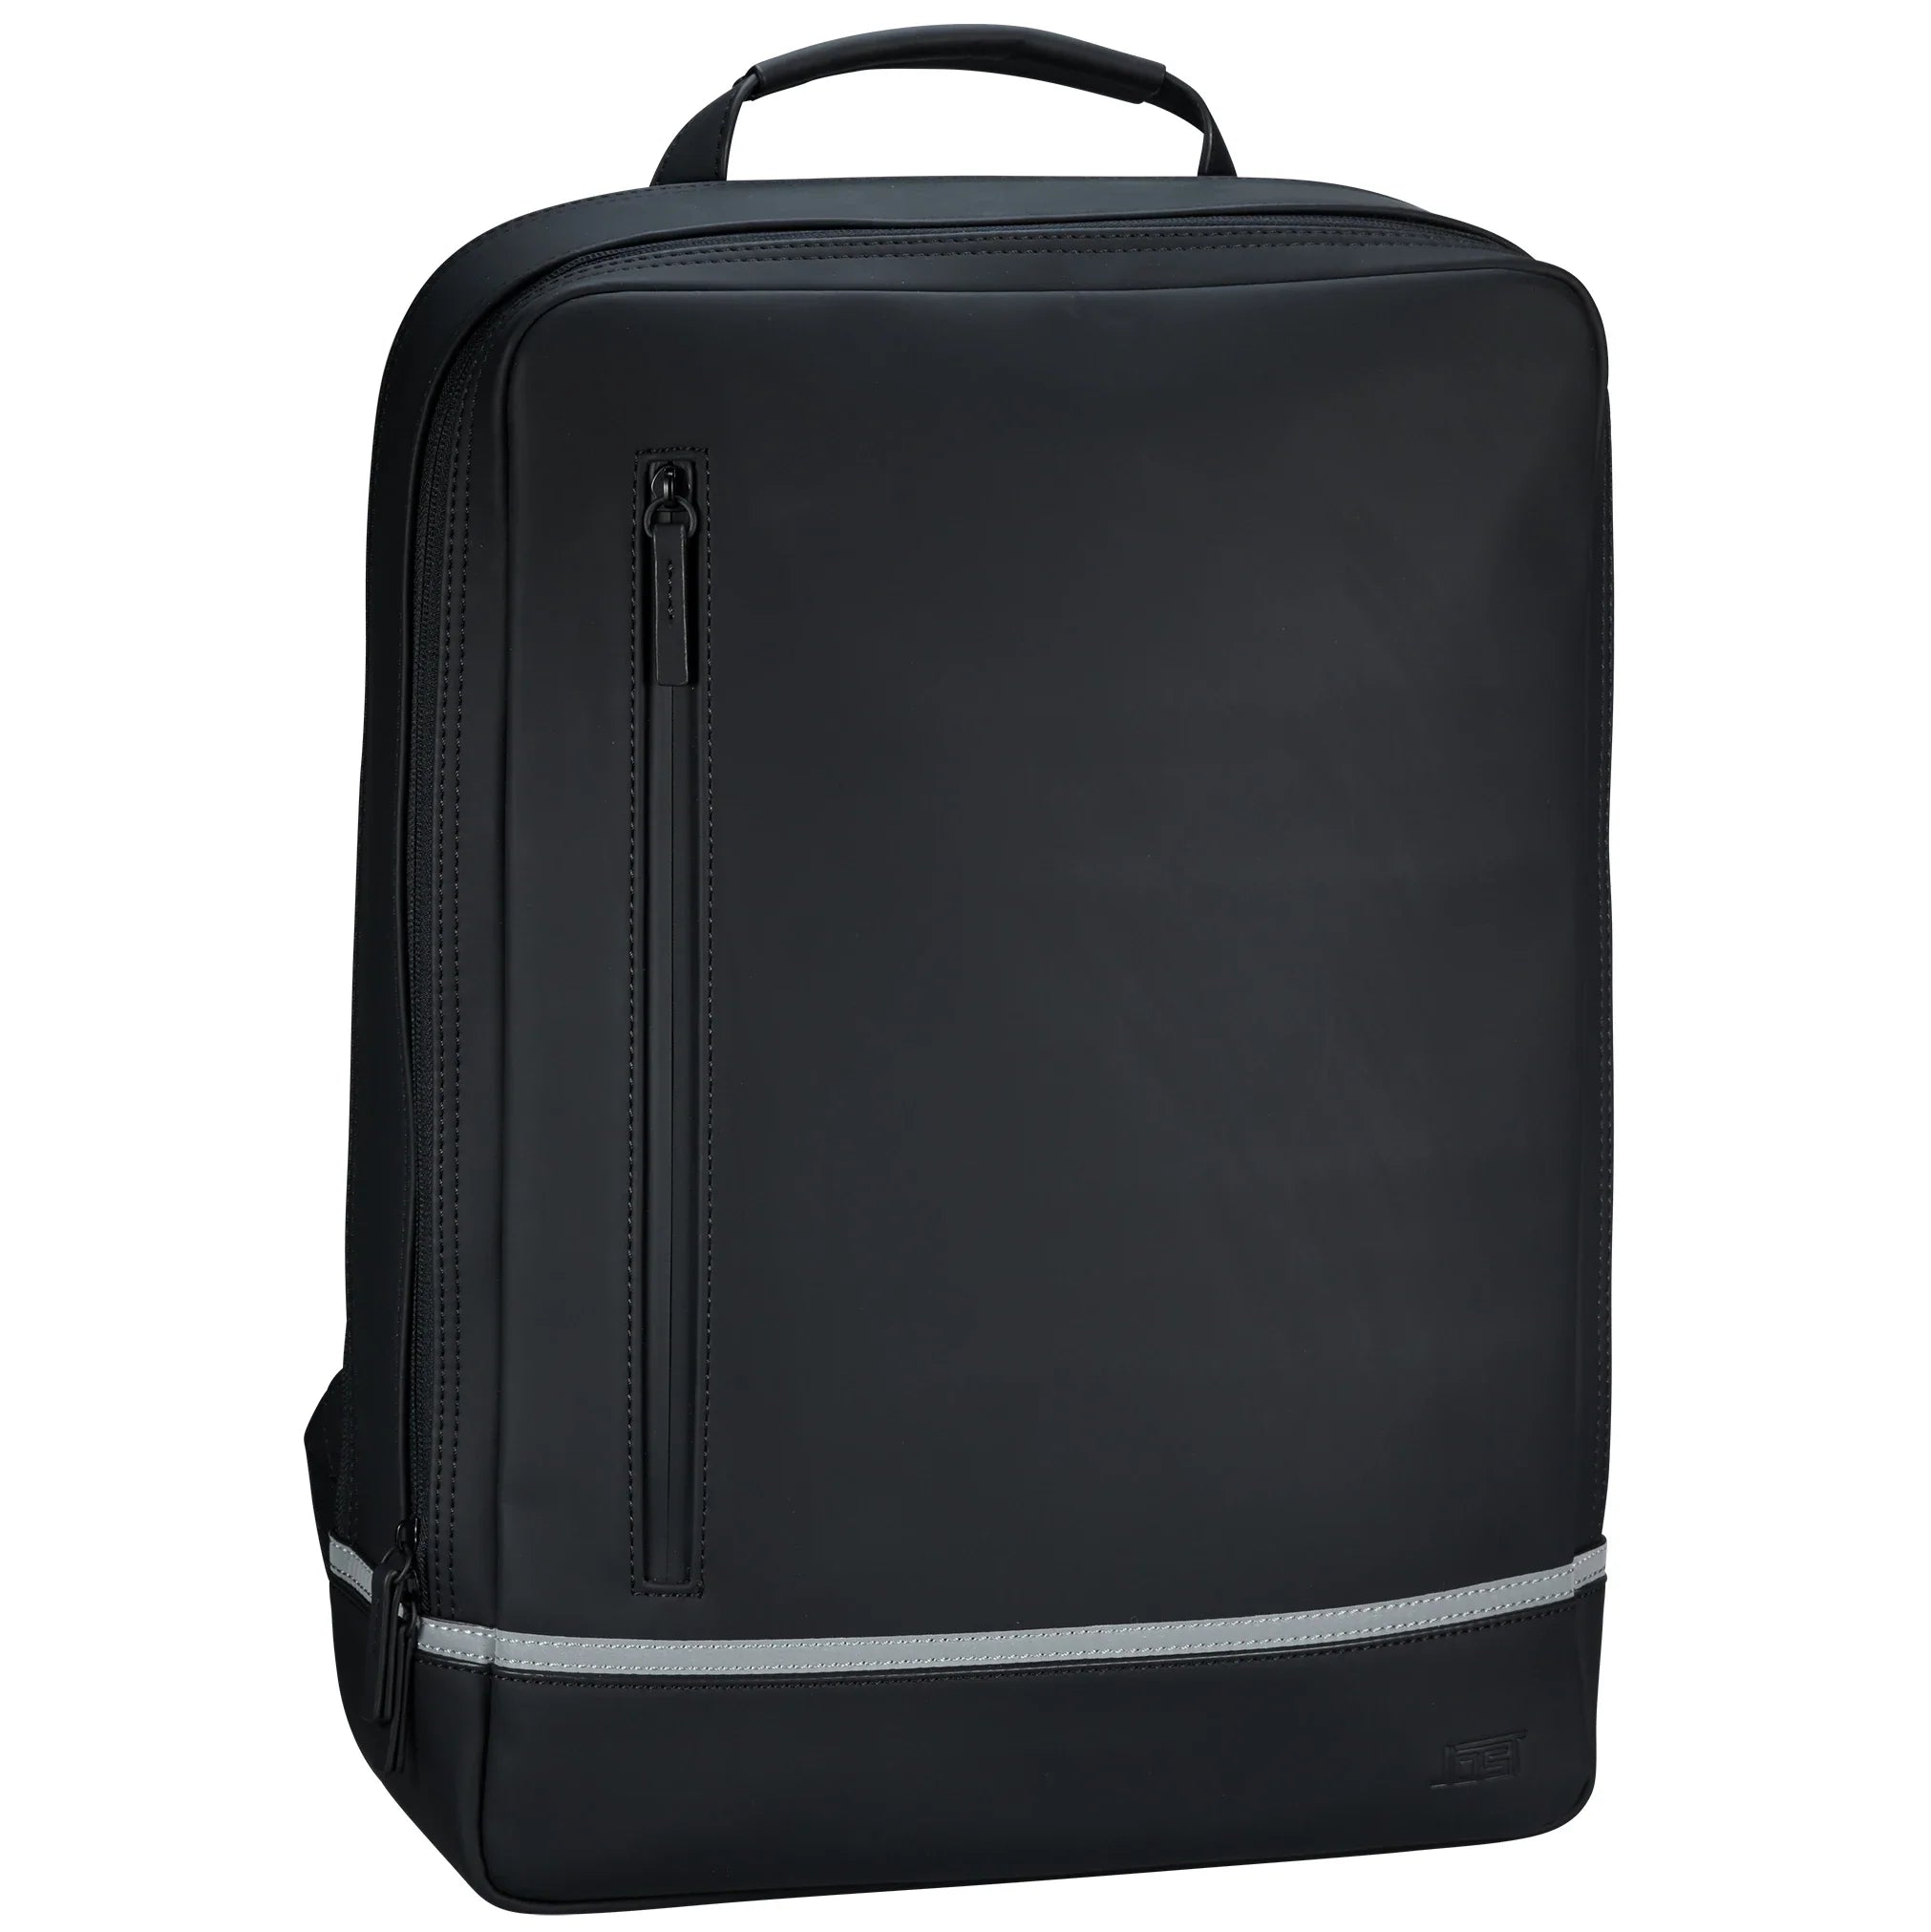 Jost Backpackspecial daypack leisure backpack 44 cm - Black